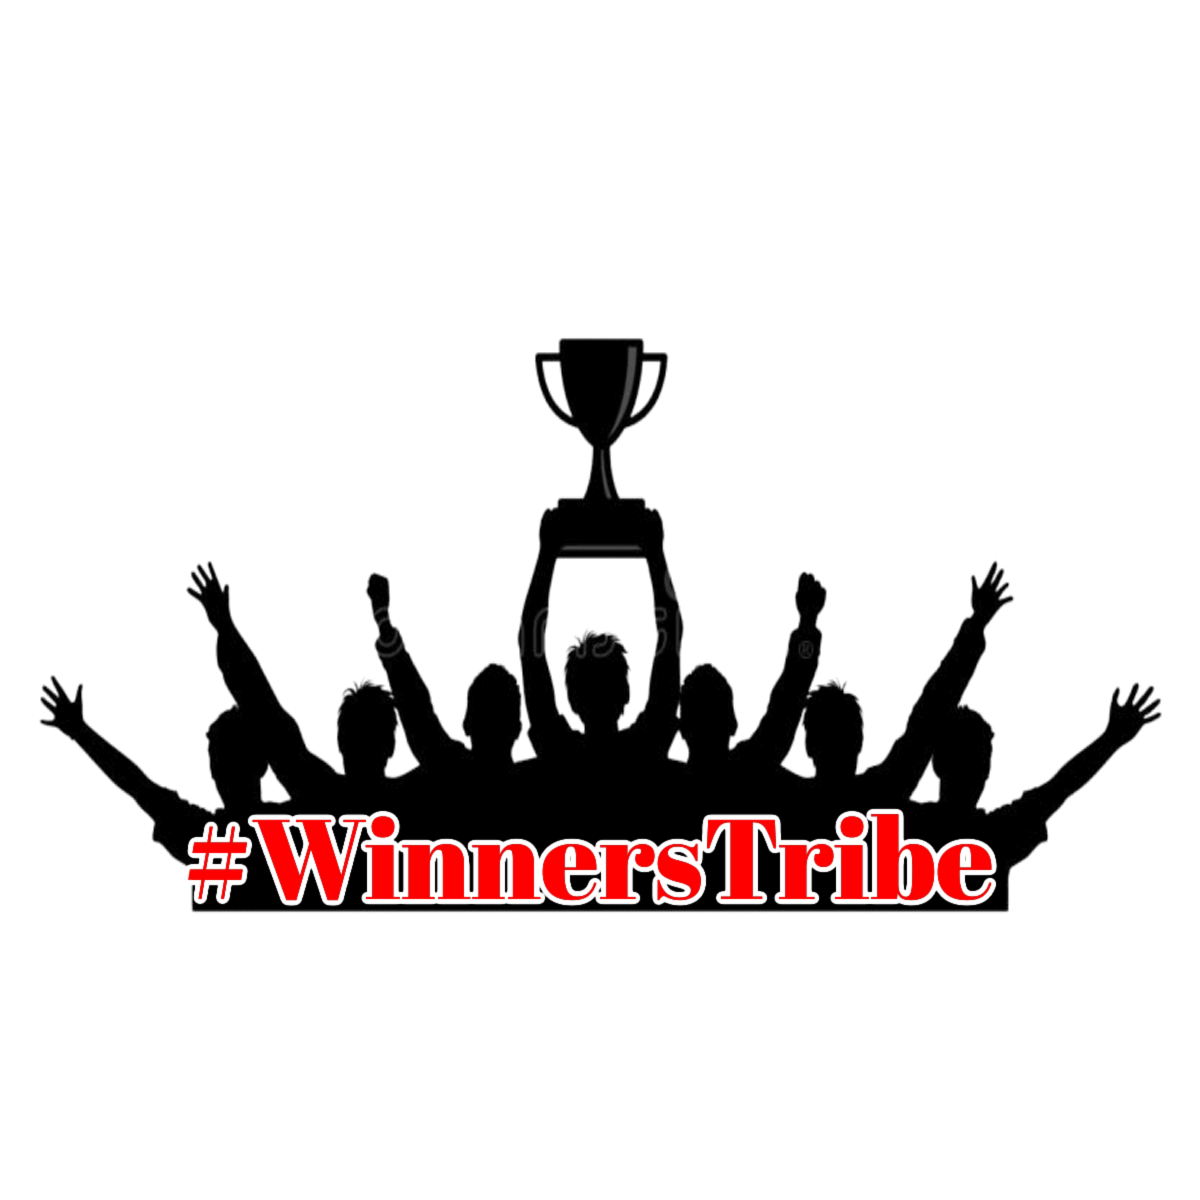 The WinnersTribe Network